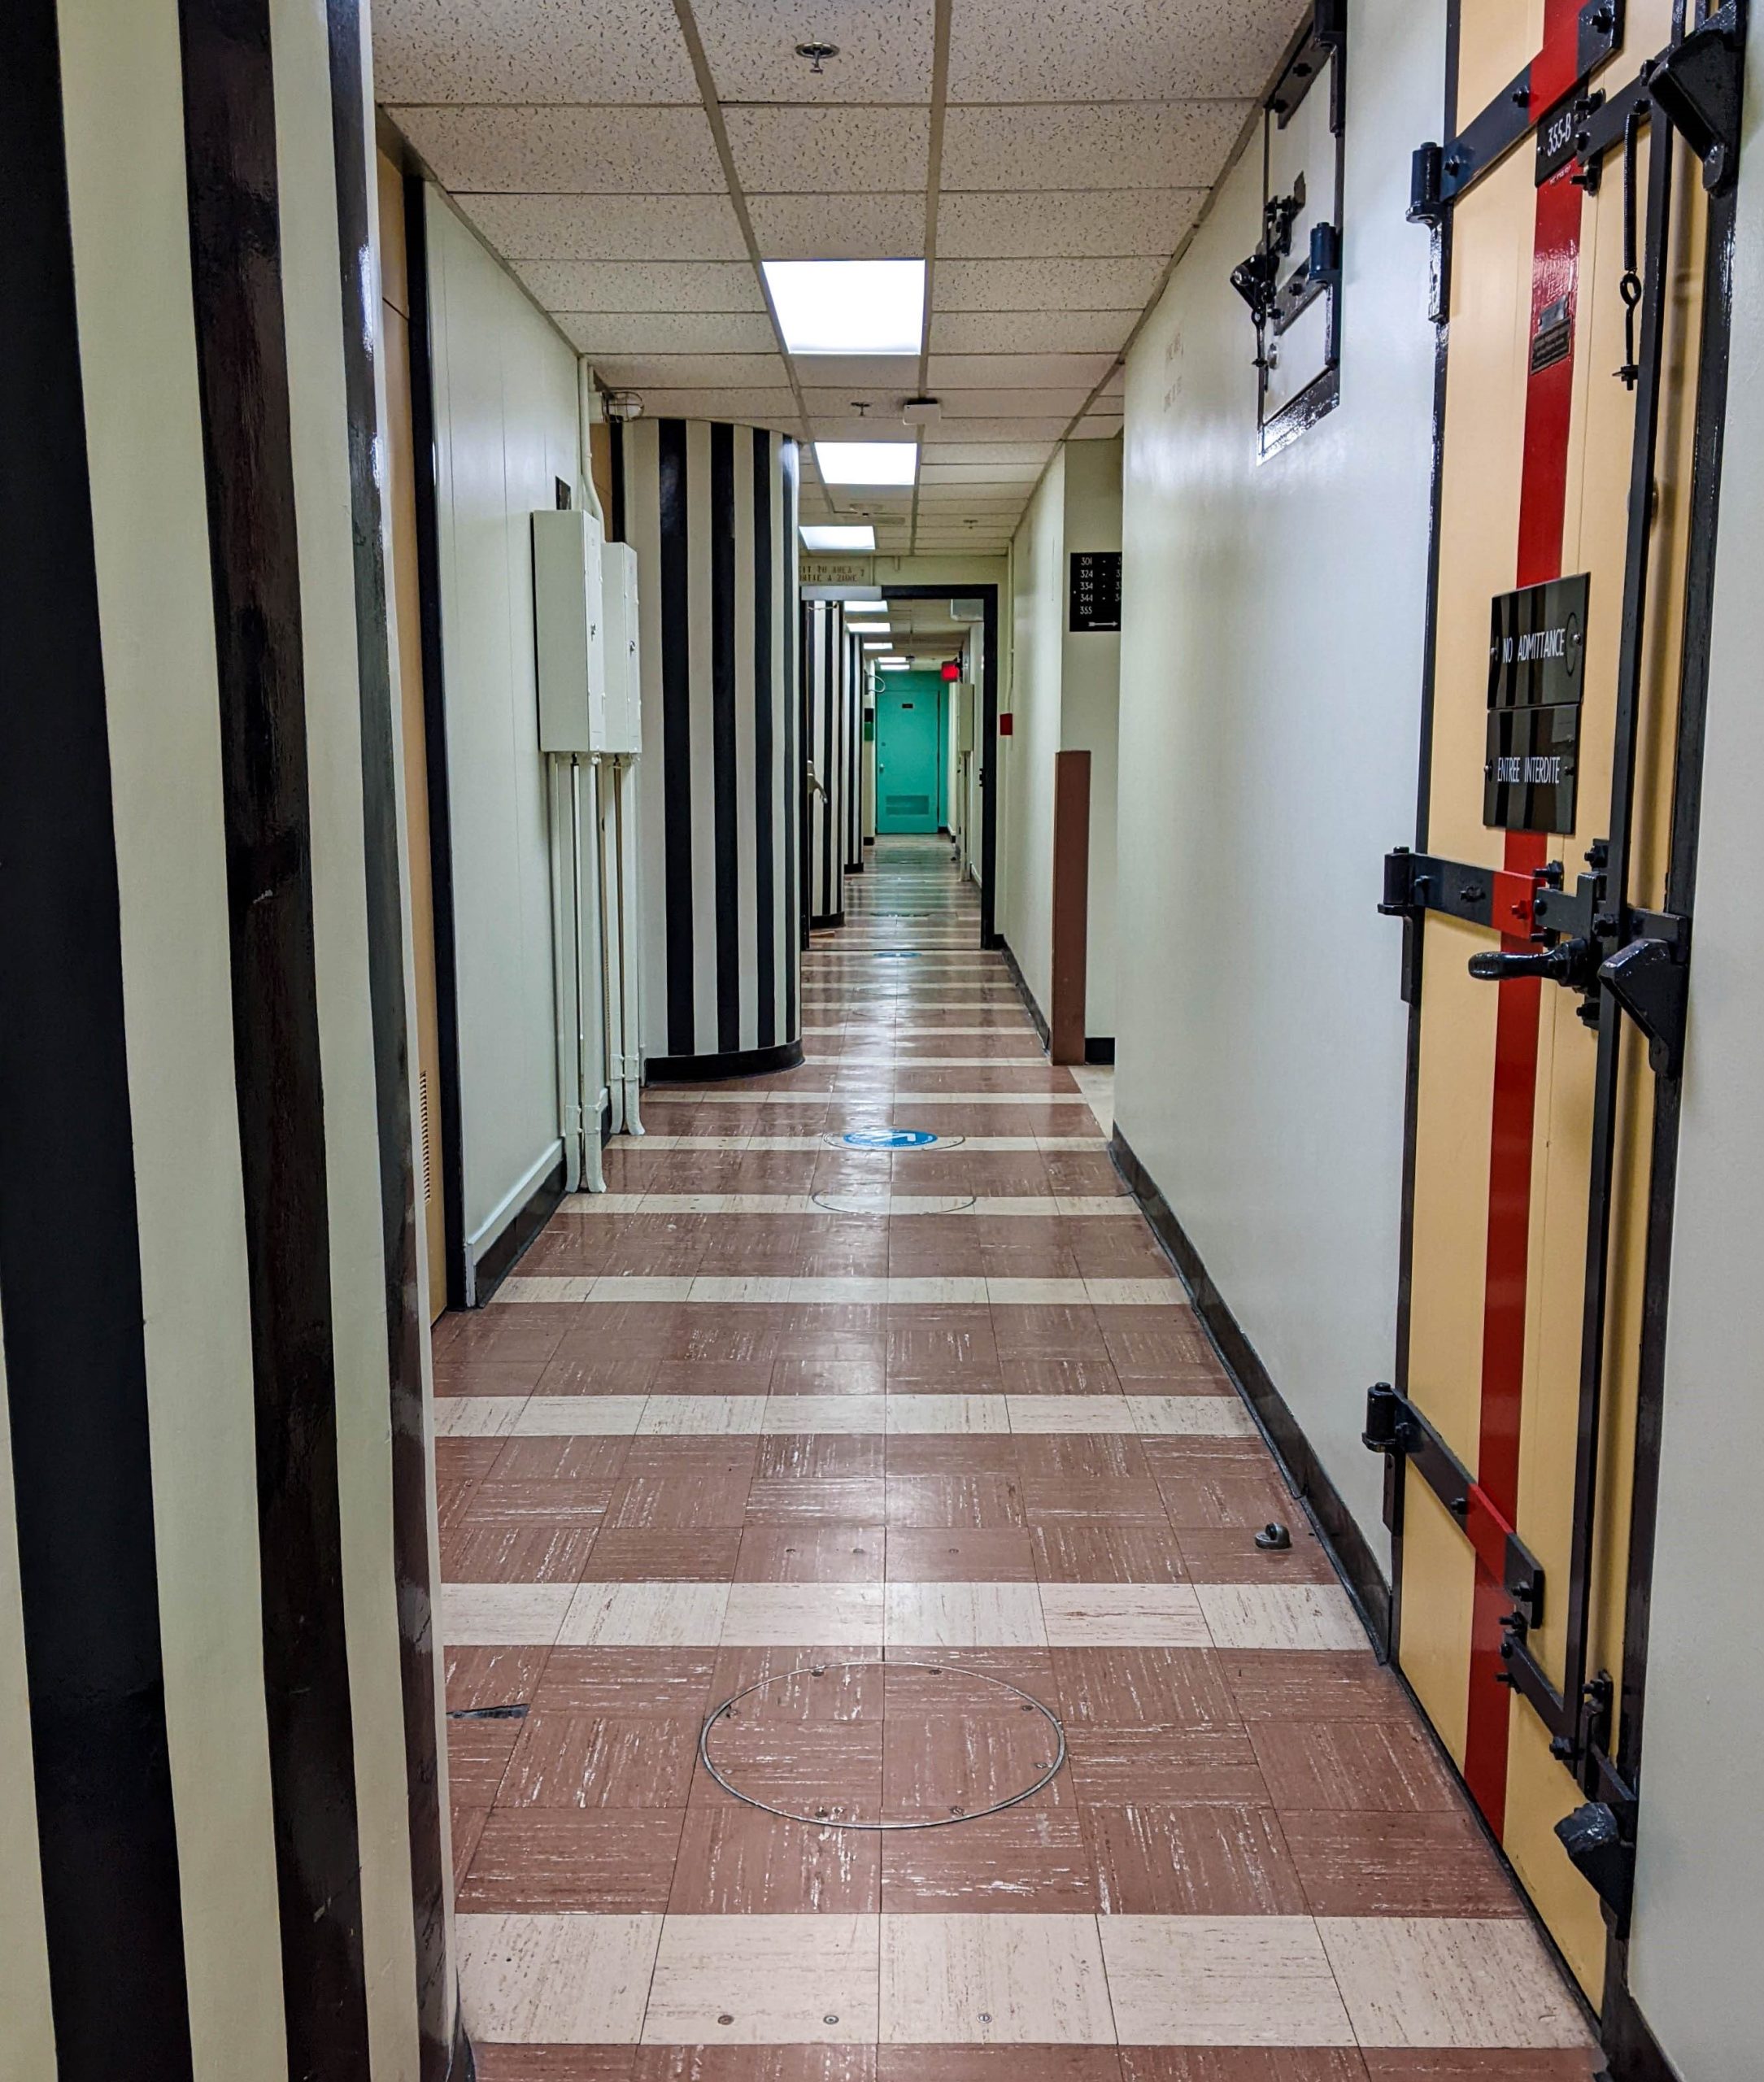 Diefenbunker hallway 